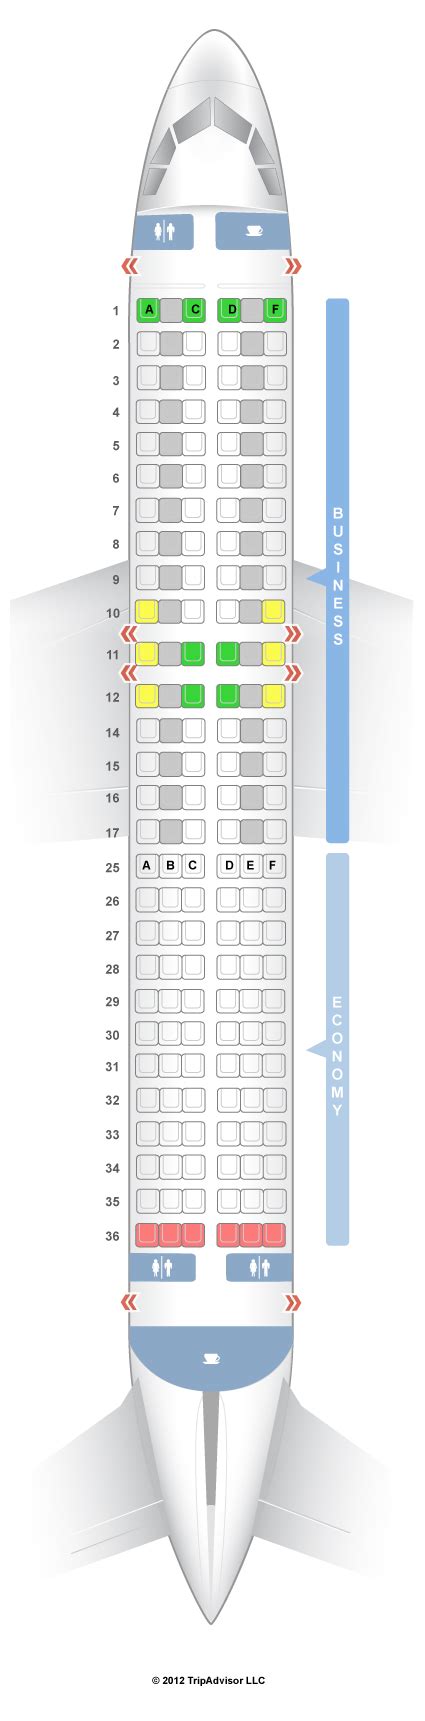 Seatguru Seat Map Swiss Airbus A320 320 V1